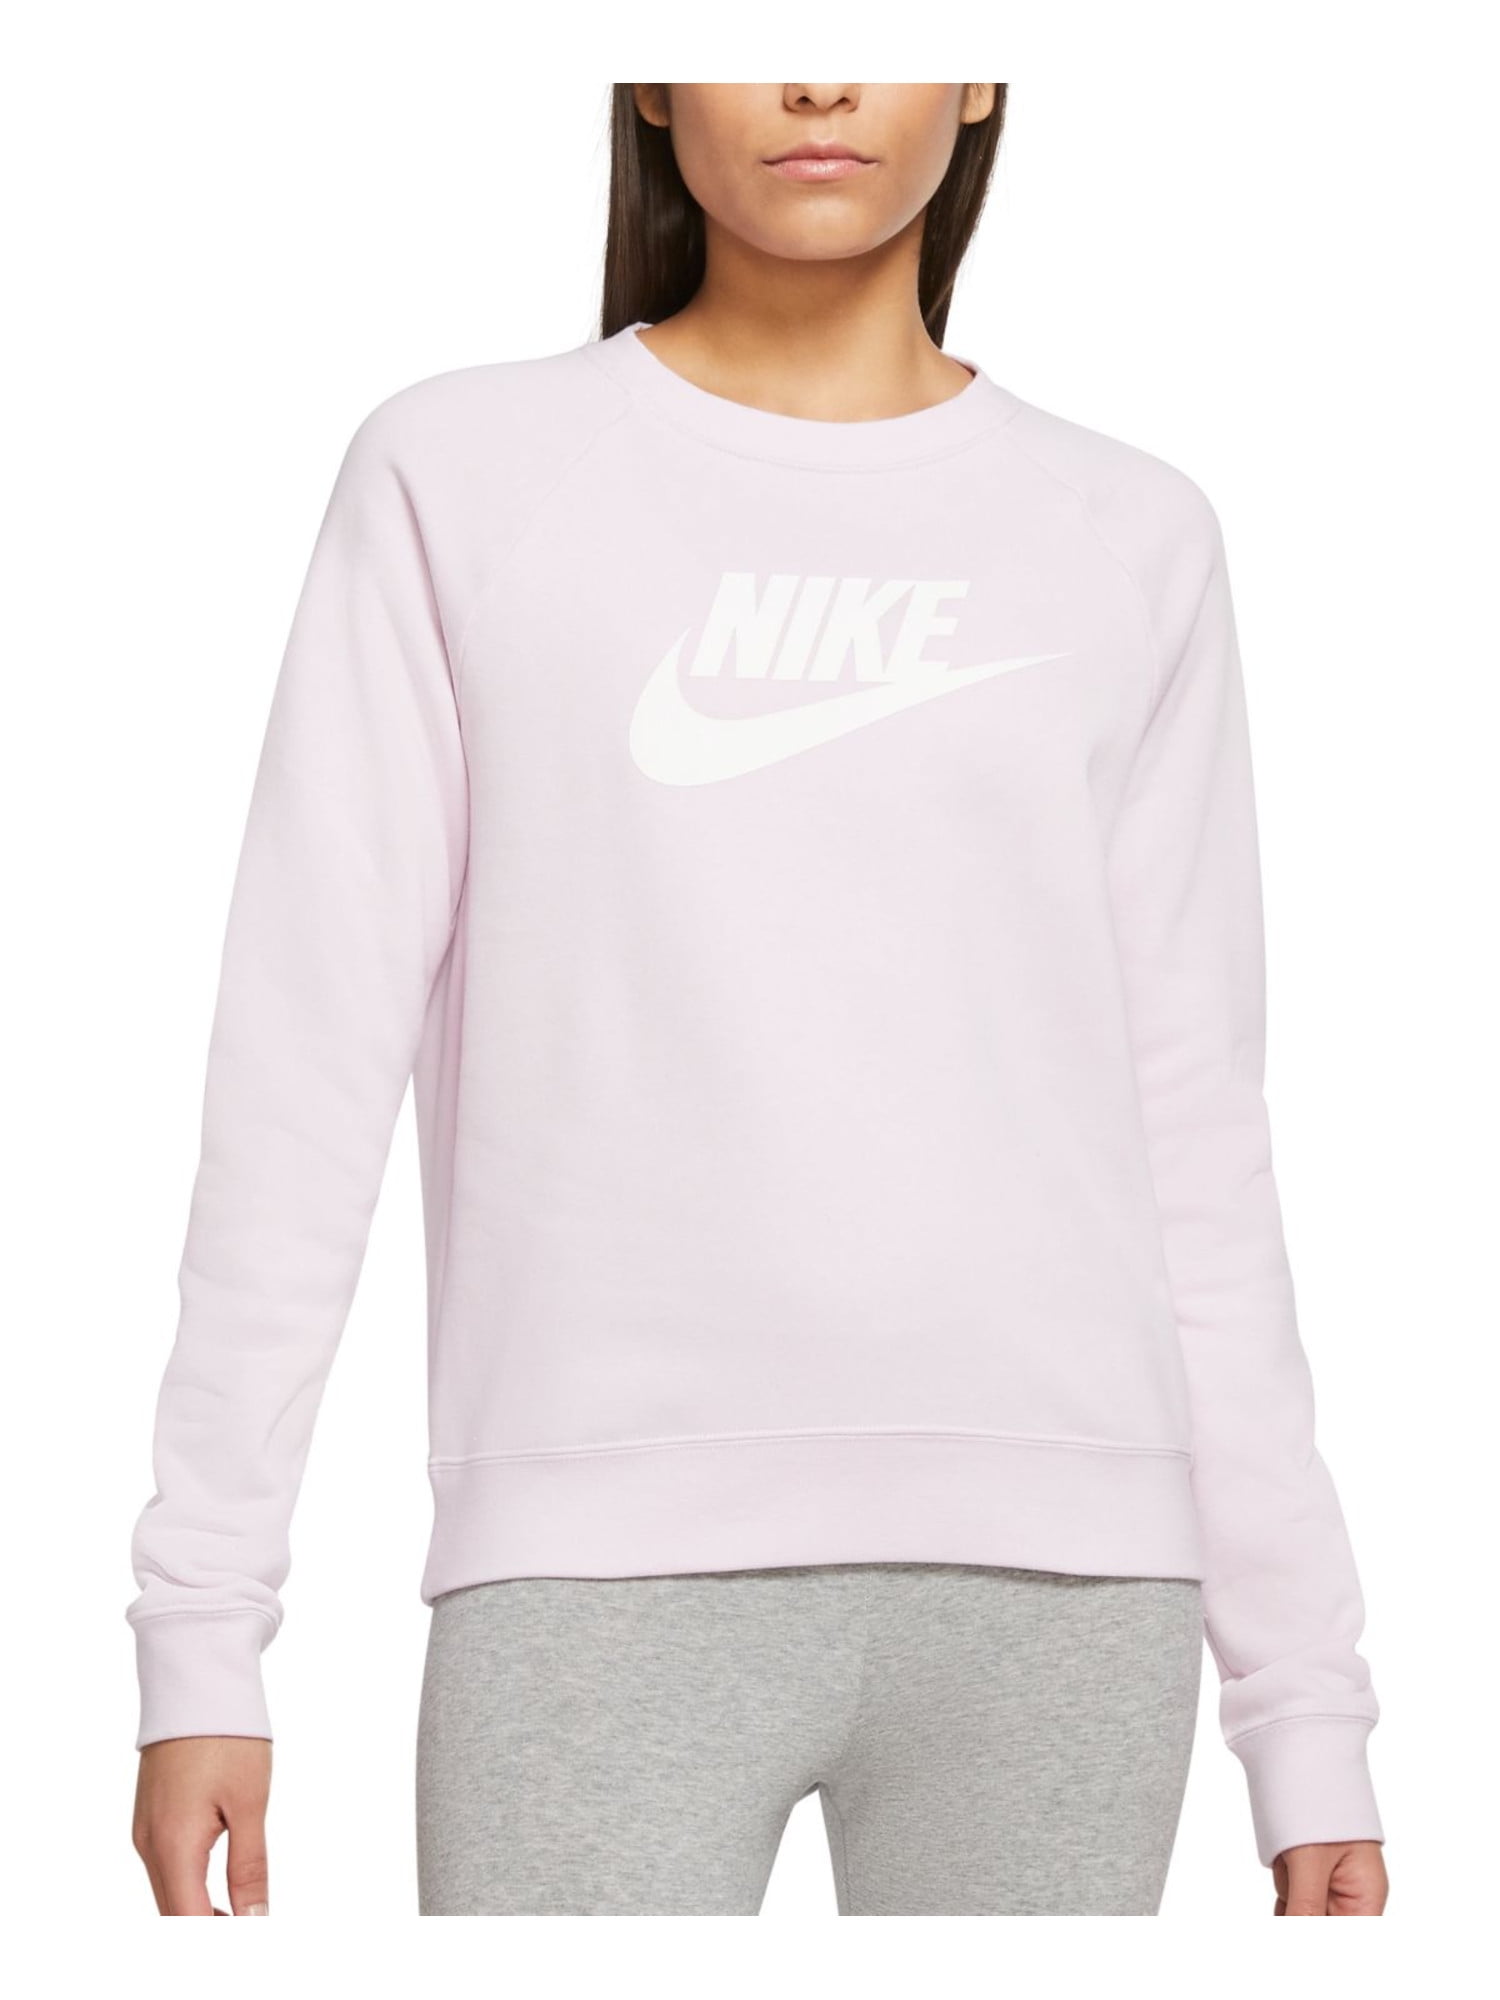 NIKE Womens Pink Logo Graphic Long Sleeve Crew Neck Sweater Plus